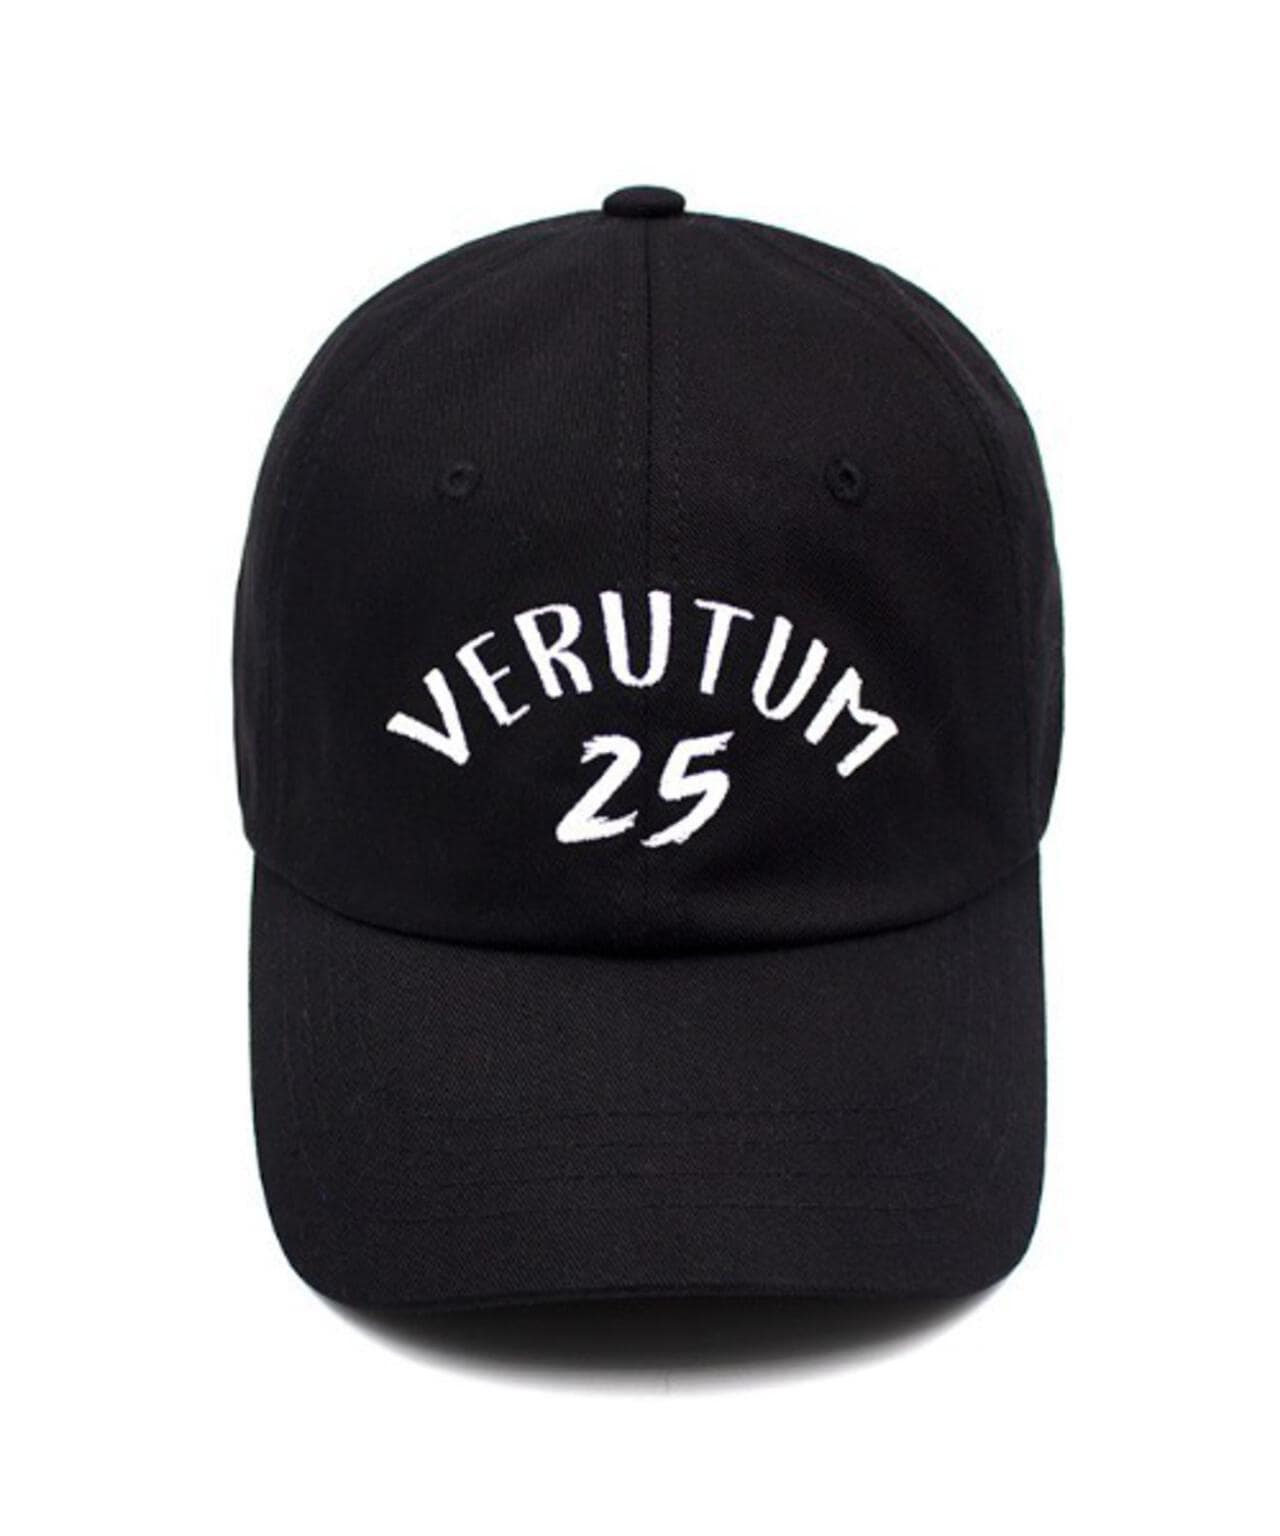 VERUTUM/ヴェルタム/VERUTUM & 25